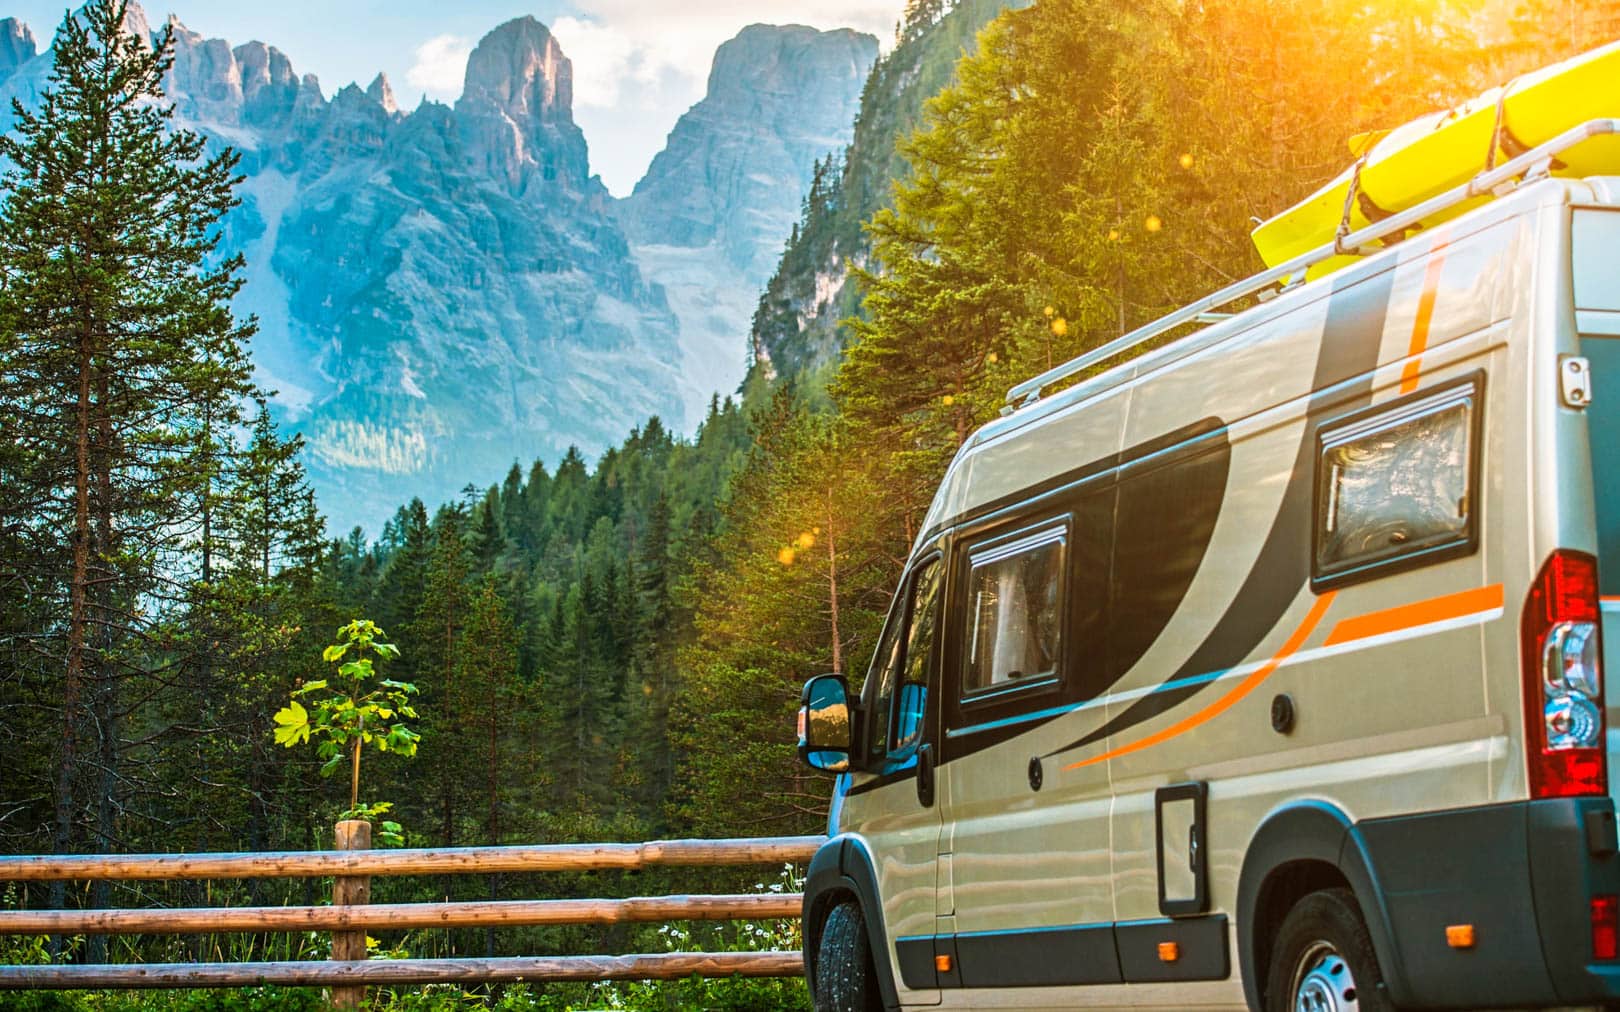 Campervan Vinyl Wrap: Completely Transform Your Van in Just One Day!